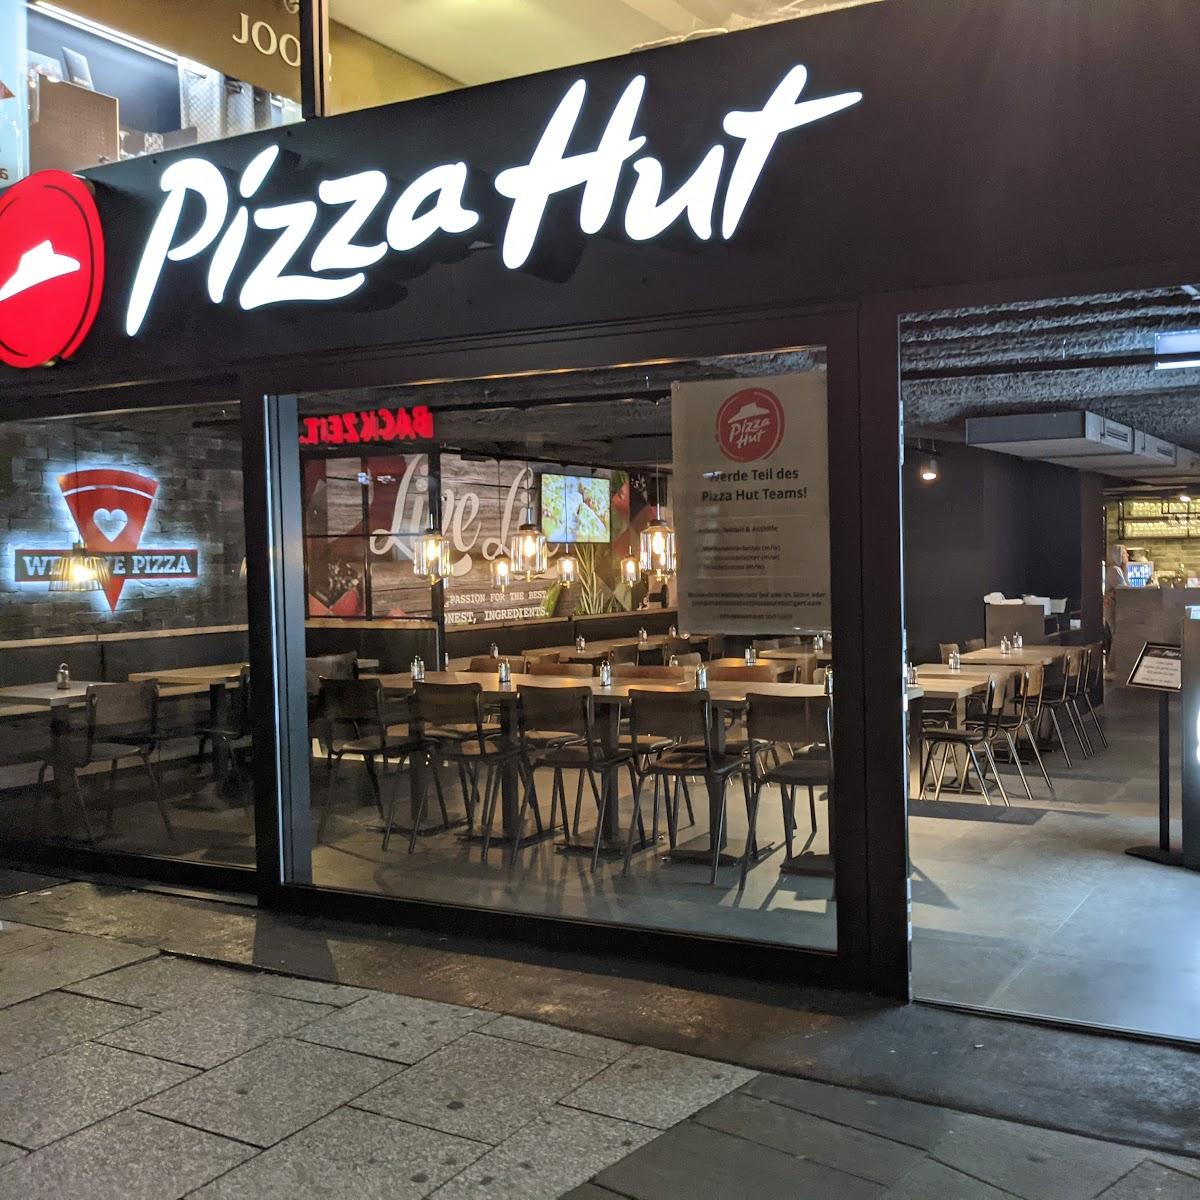 Restaurant "Pizza Hut" in Stuttgart